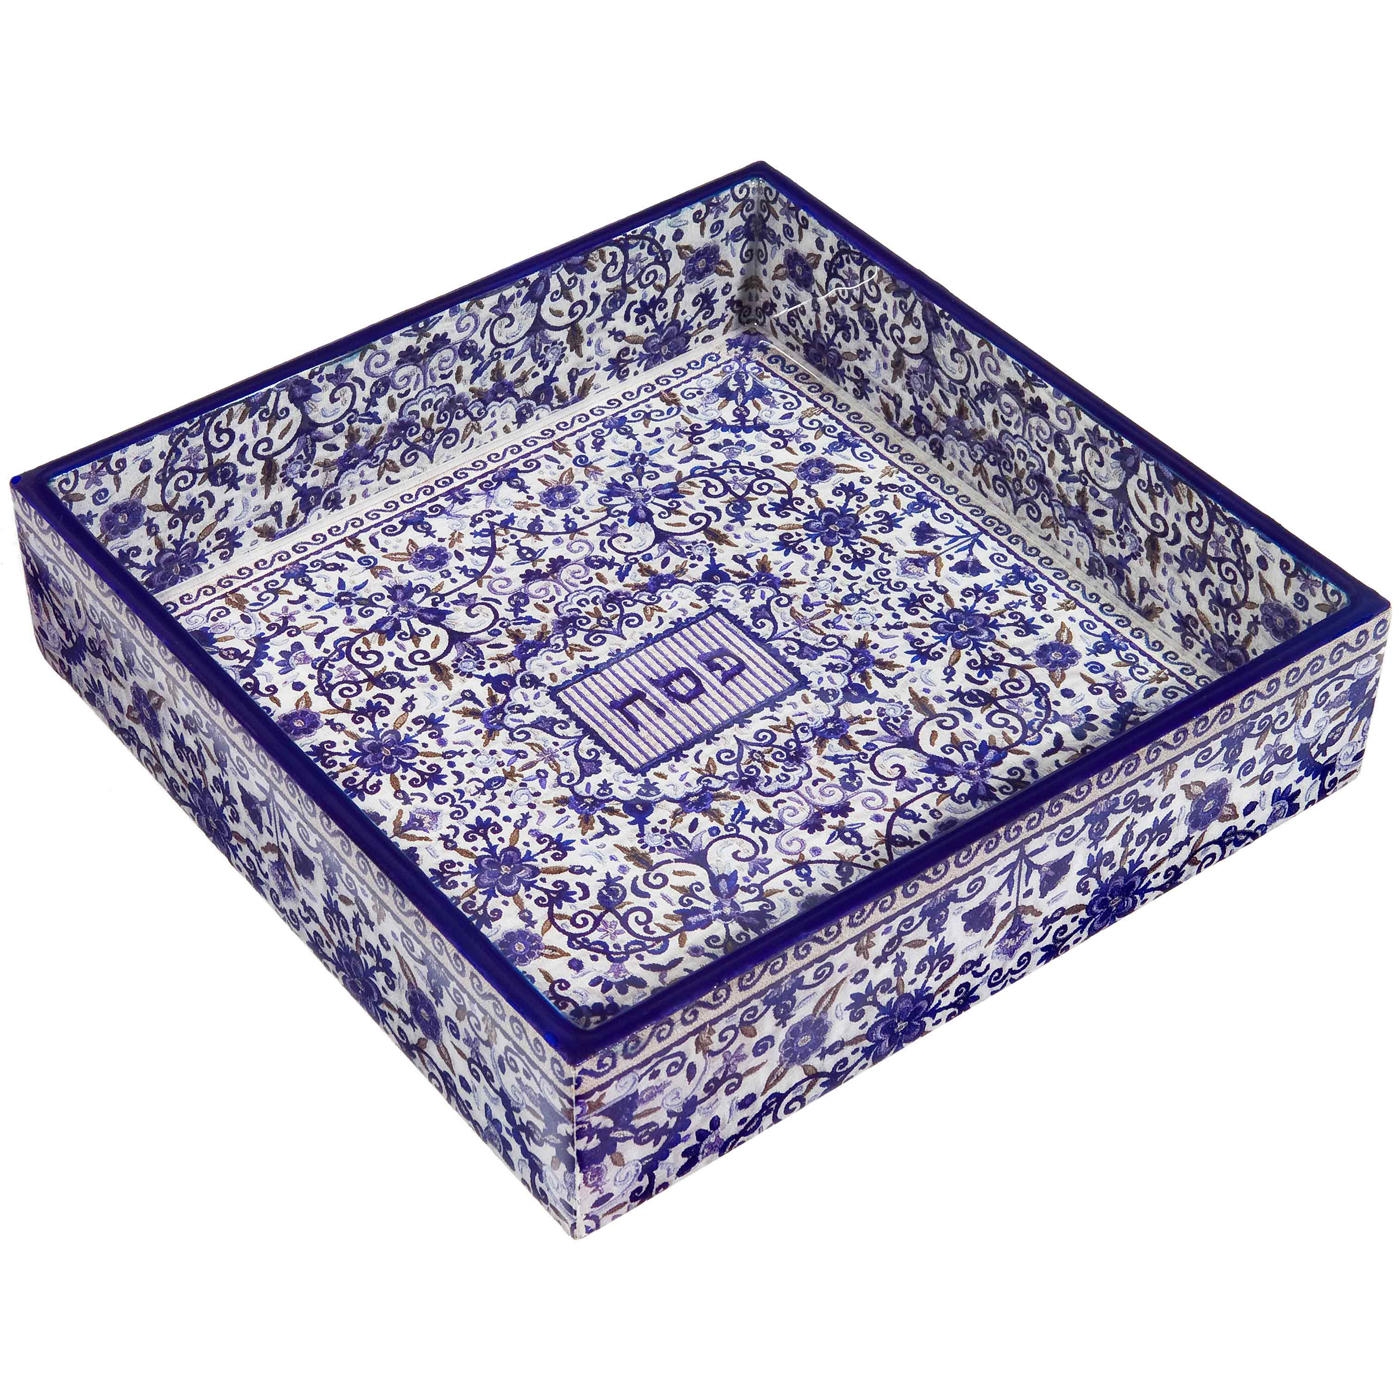 Yair Emanuel Painted Wooden Matzah Tray - Blue Flowers - 1